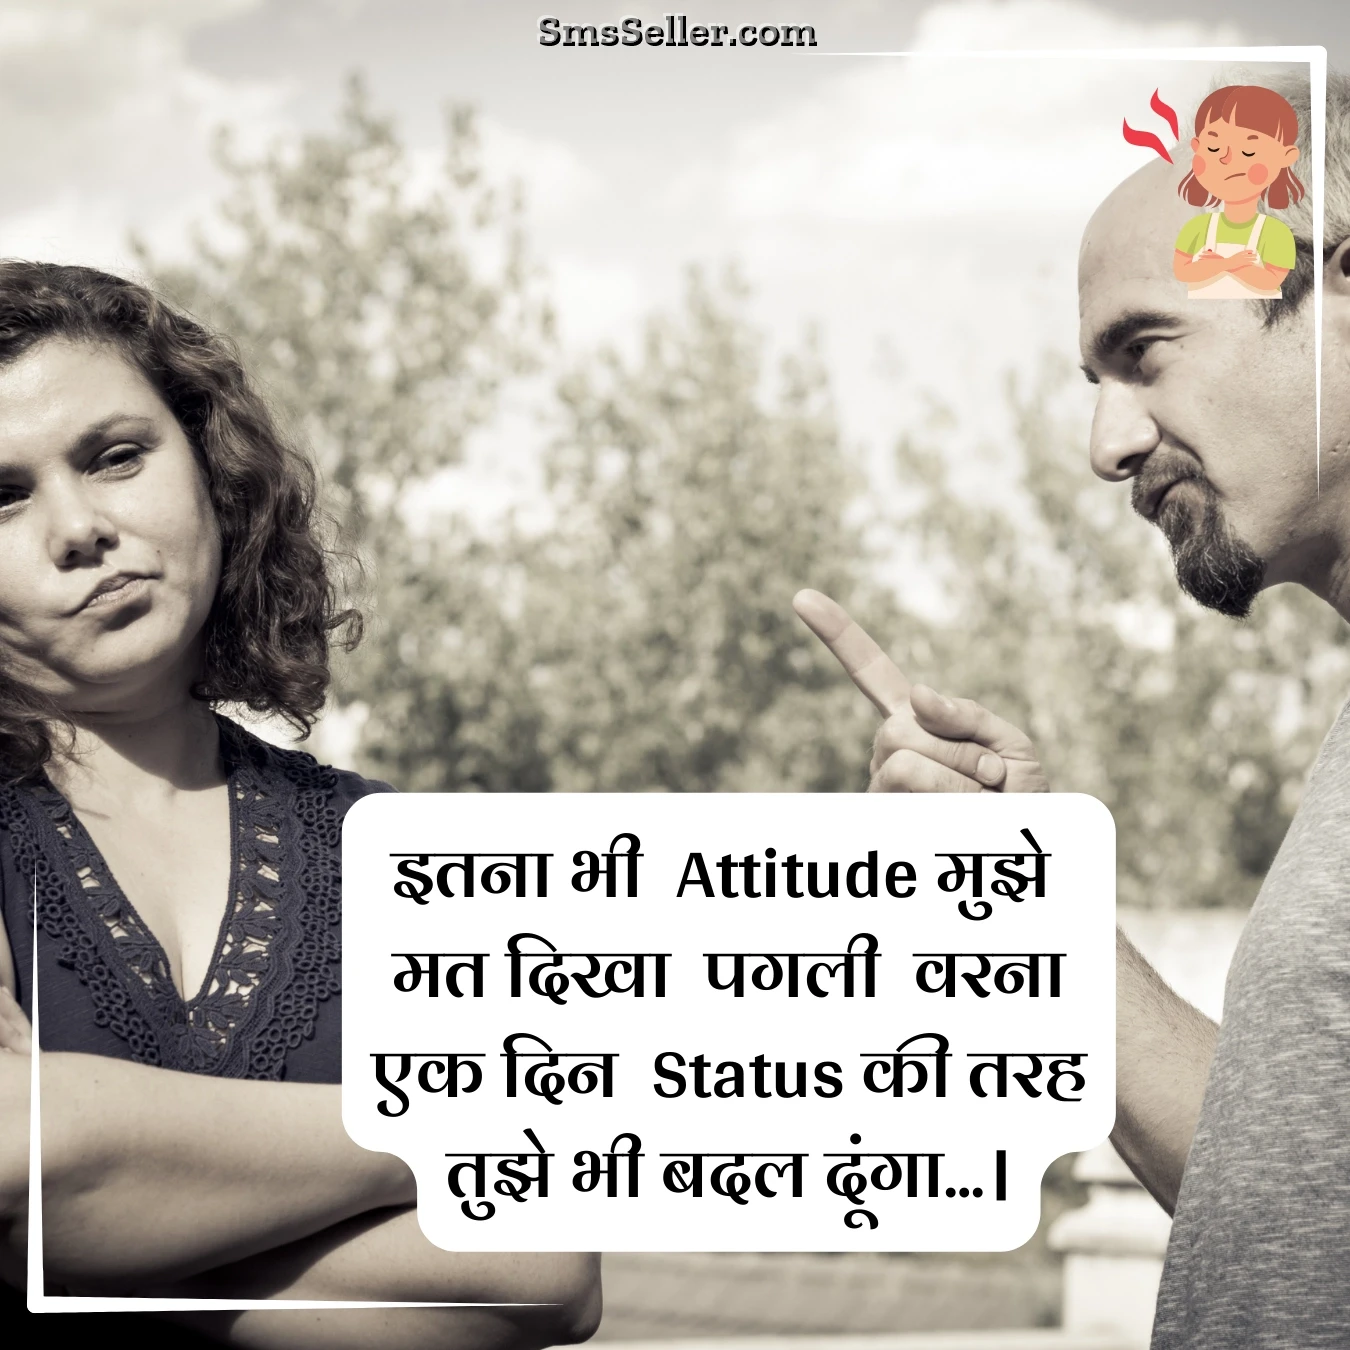 gym attitude hindi bhee attitudai mat dikha